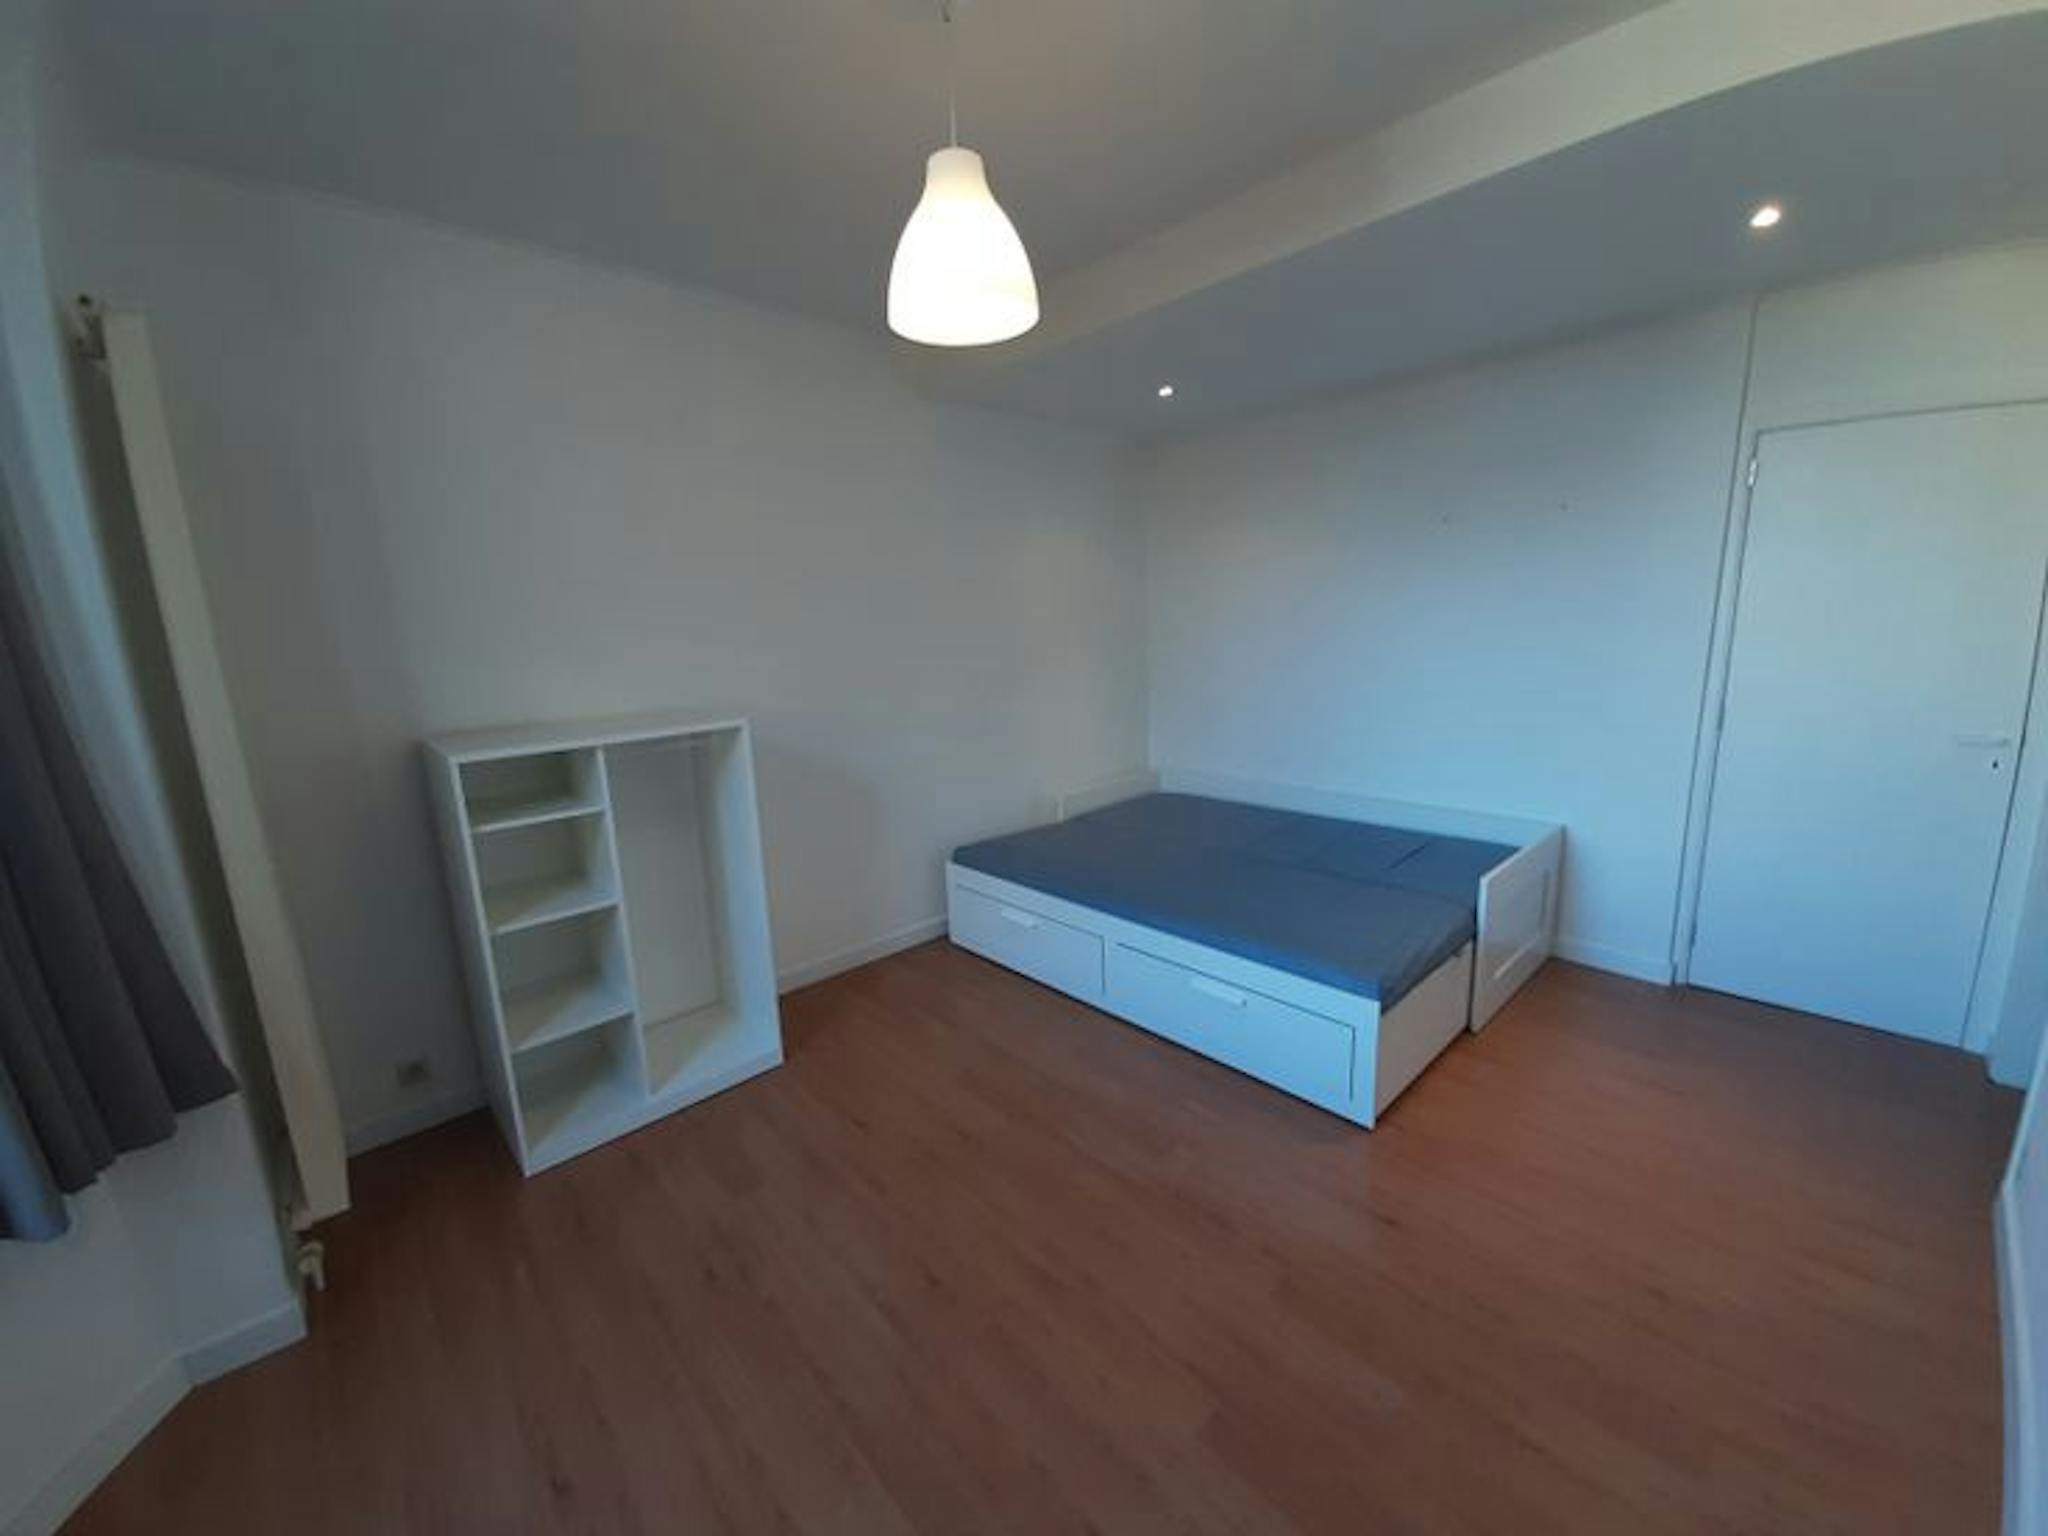 Appartement te  huur in Sint-Agatha-Berchem 1082 649.00€ 0 slaapkamers 35.00m² - Zoekertje 85448